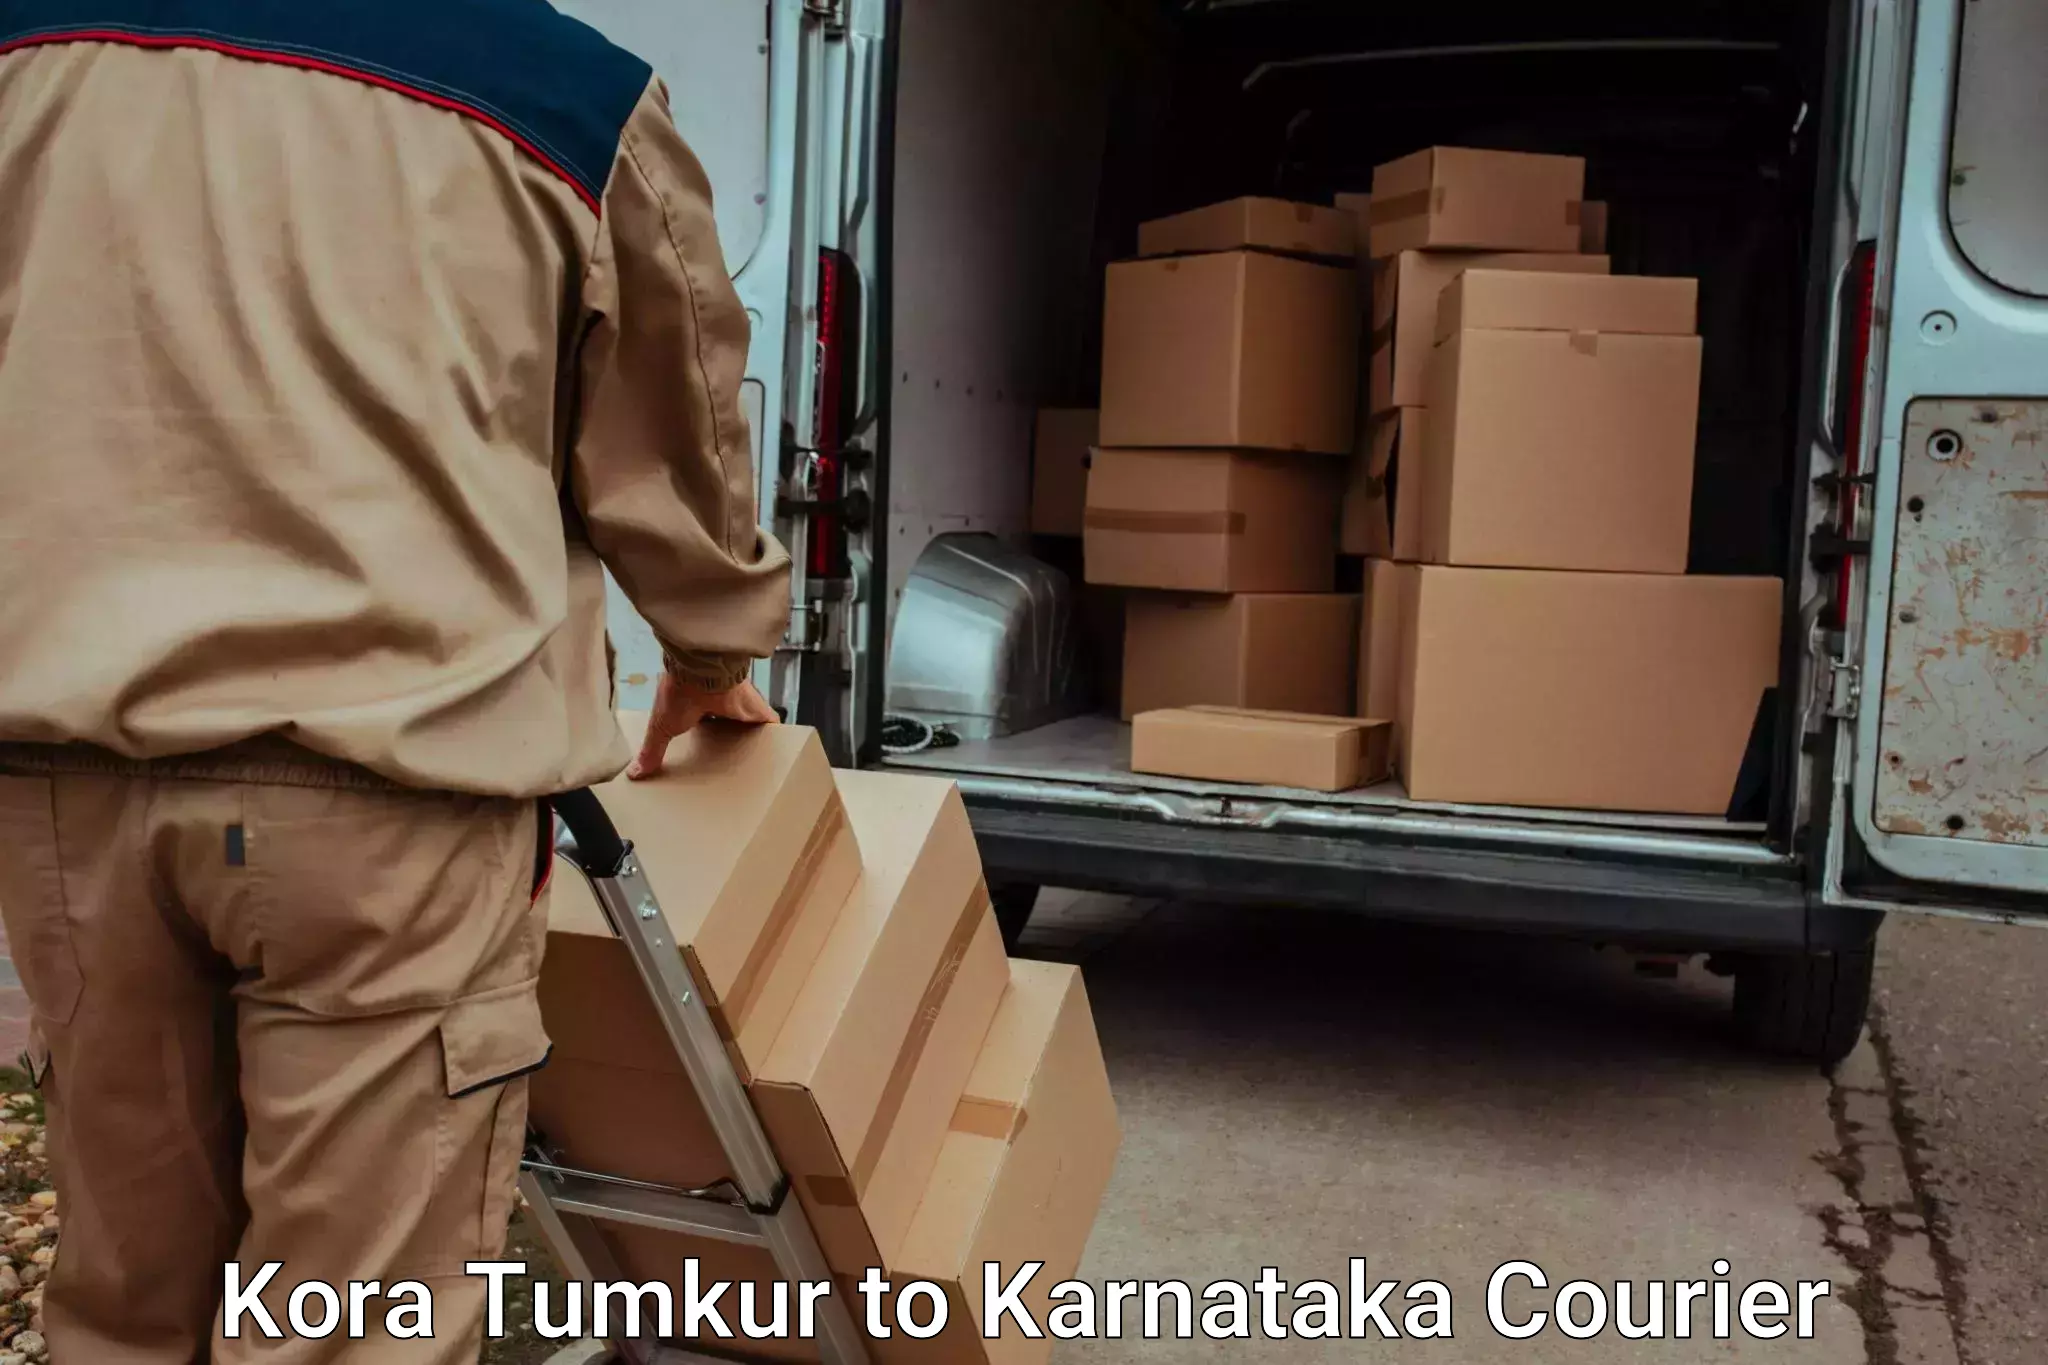 Professional moving company Kora Tumkur to Karnataka